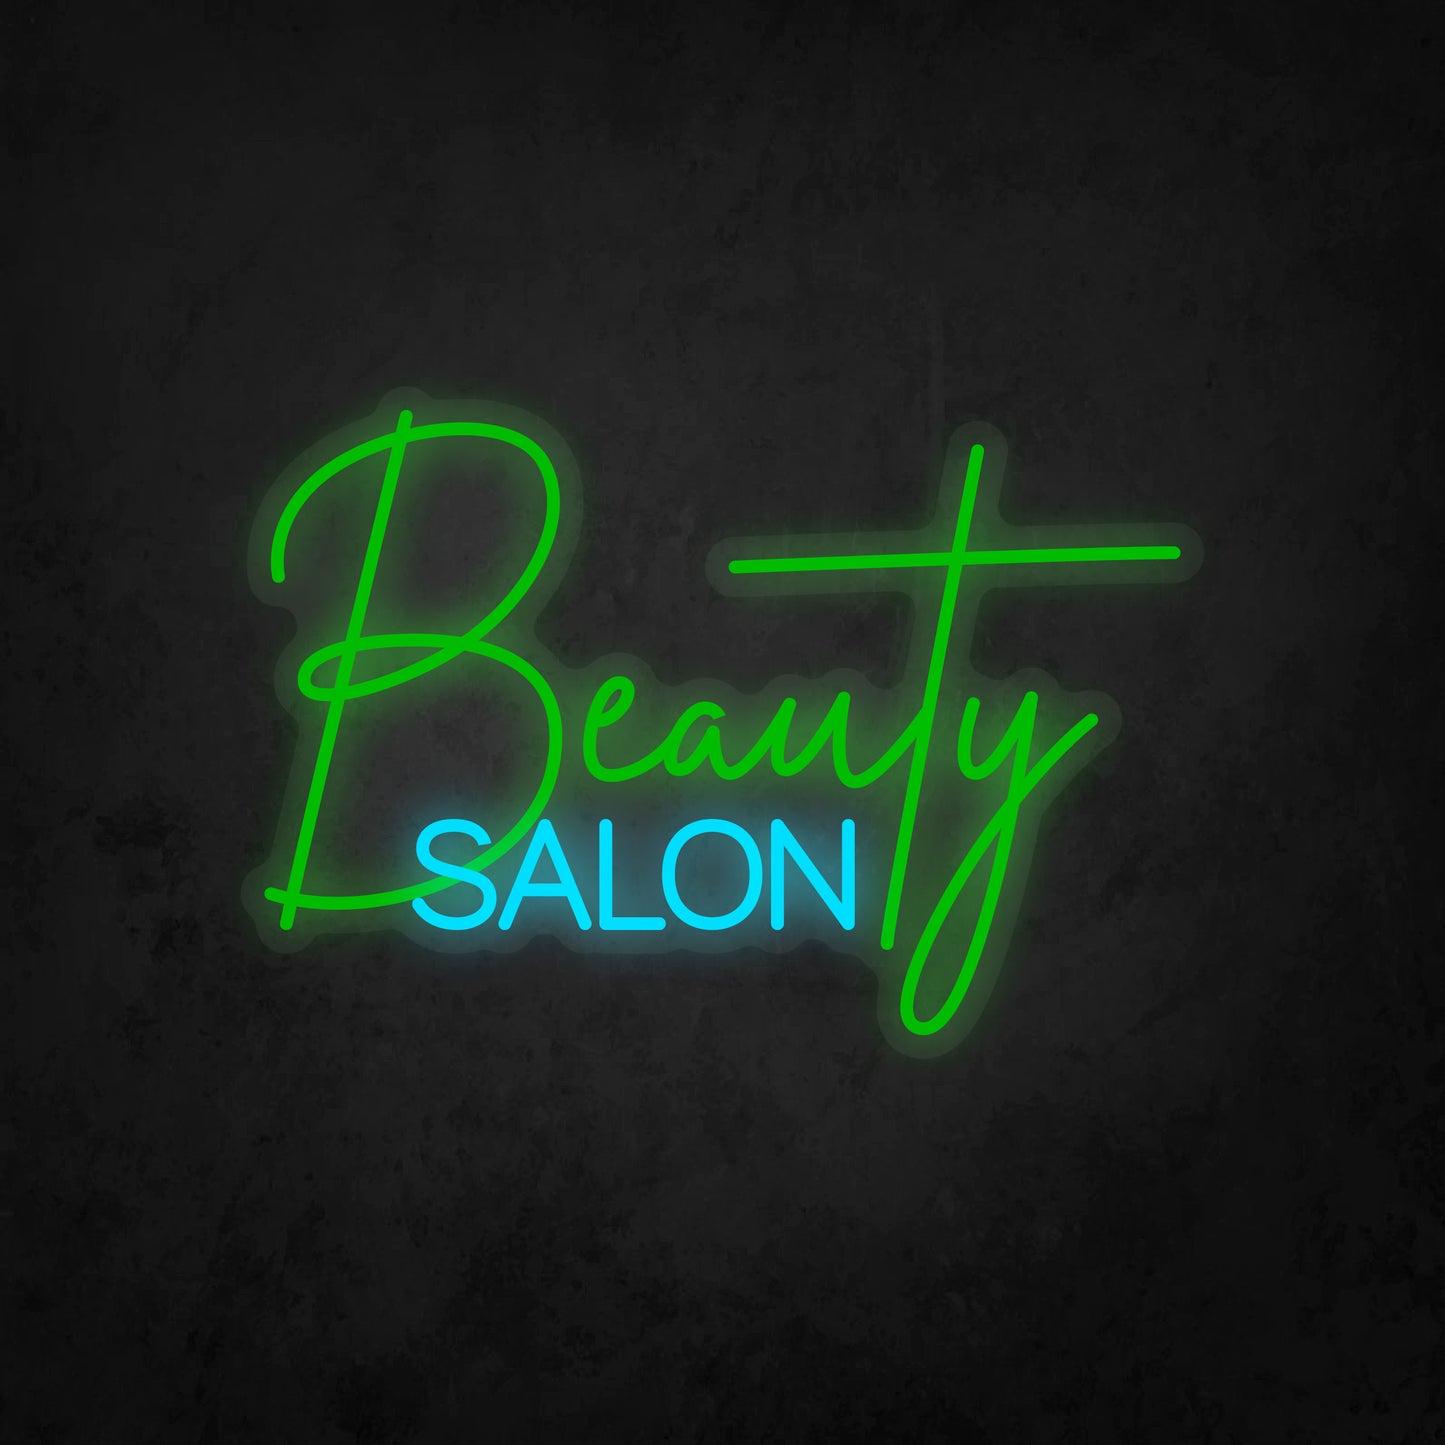 LED Neon Sign - Beauty Salon